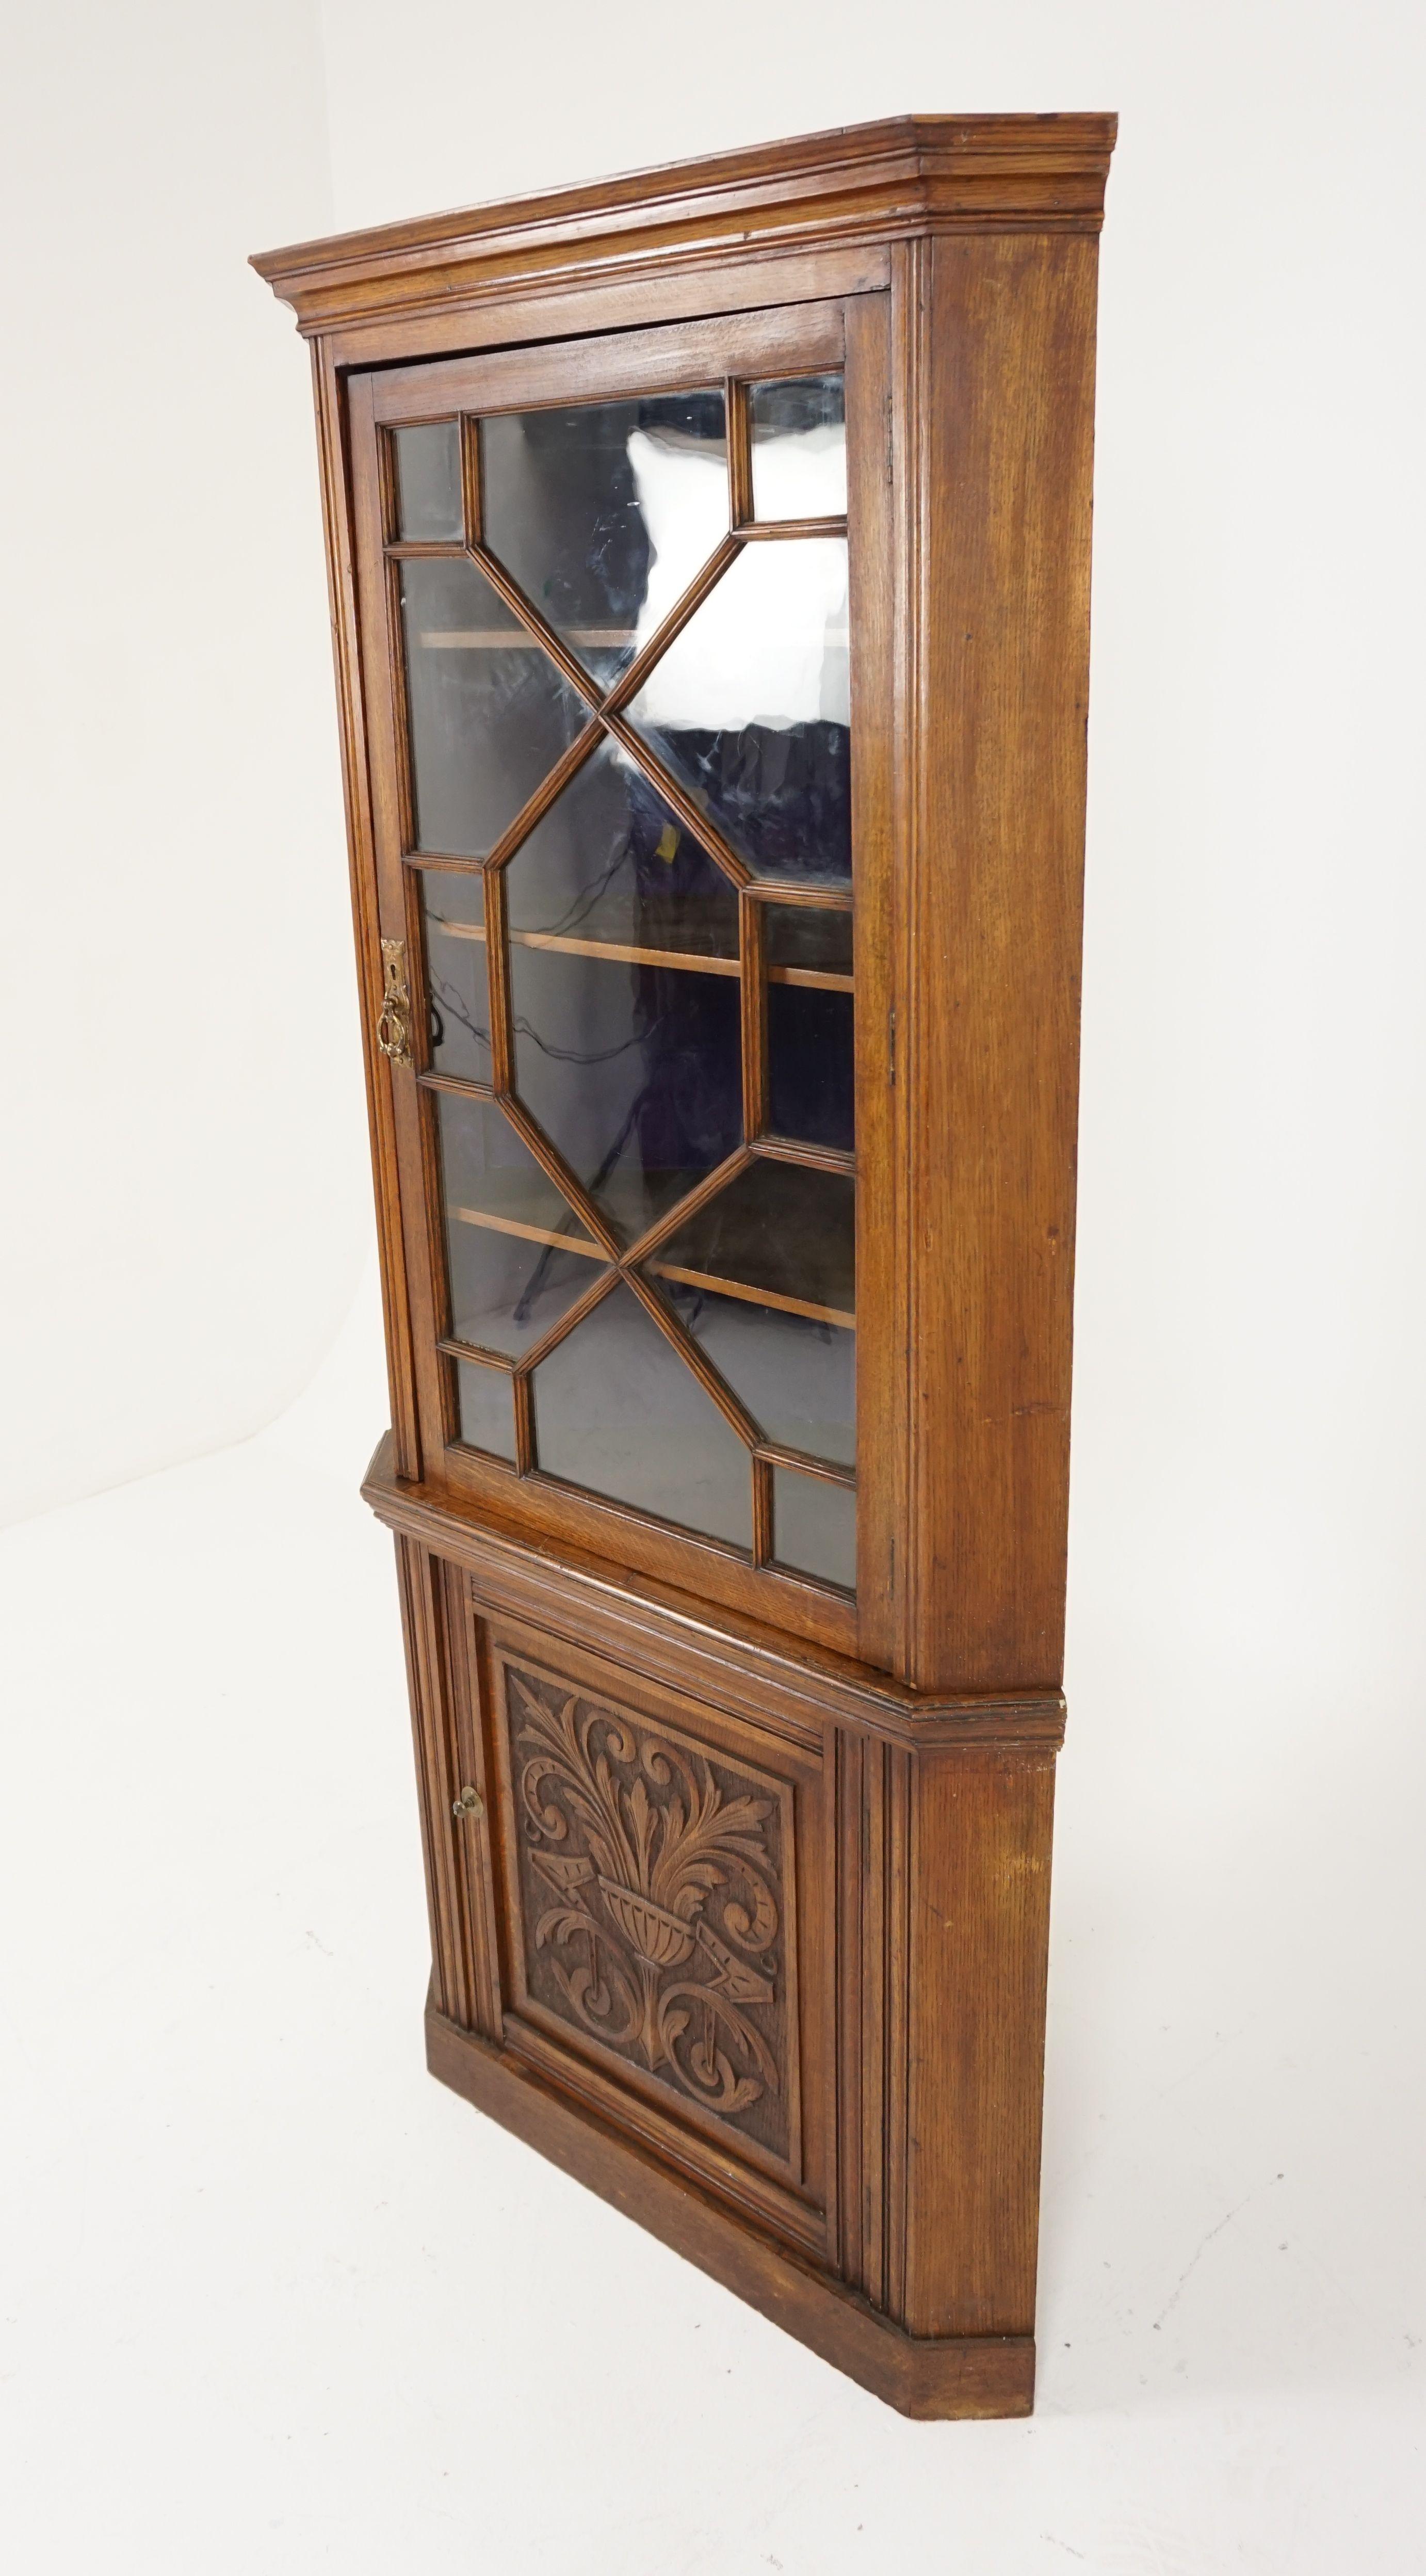 Hand-Crafted Antique Corner Cabinet, Carved Oak, Free Standing Cabinet, Scotland, 1900